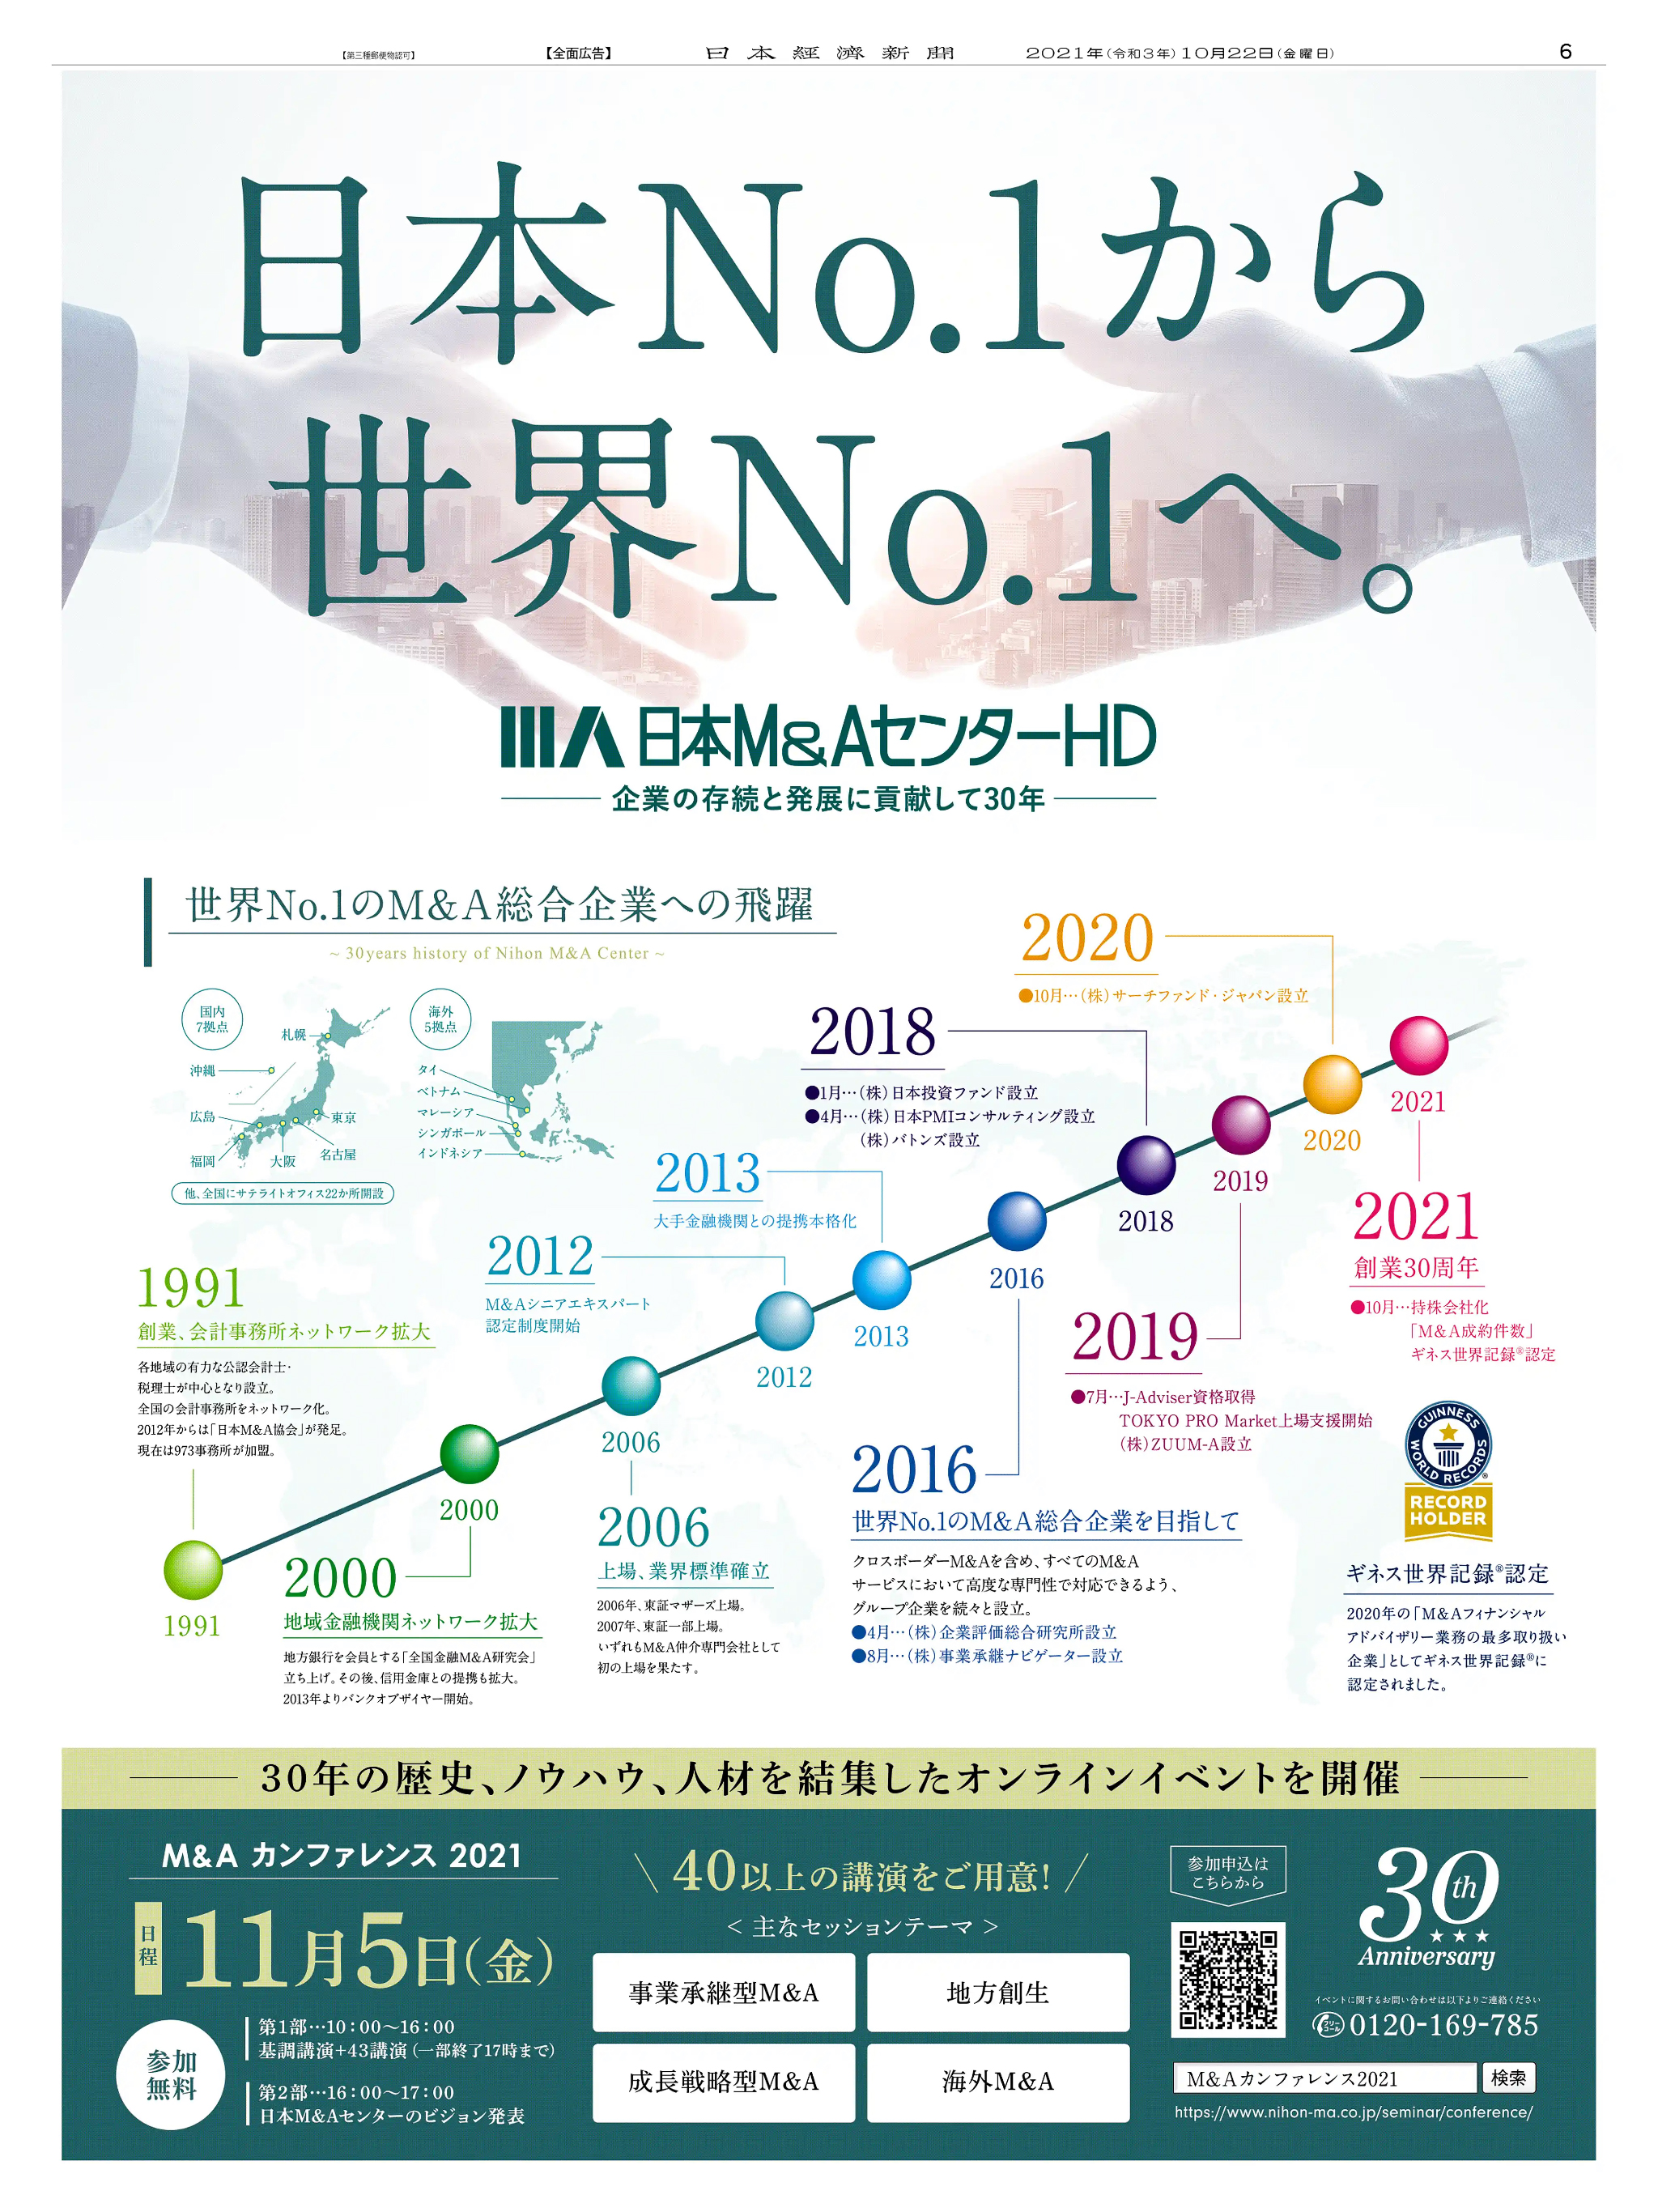 周年記念広告事例 「日本M&Aセンター 創業30周年」